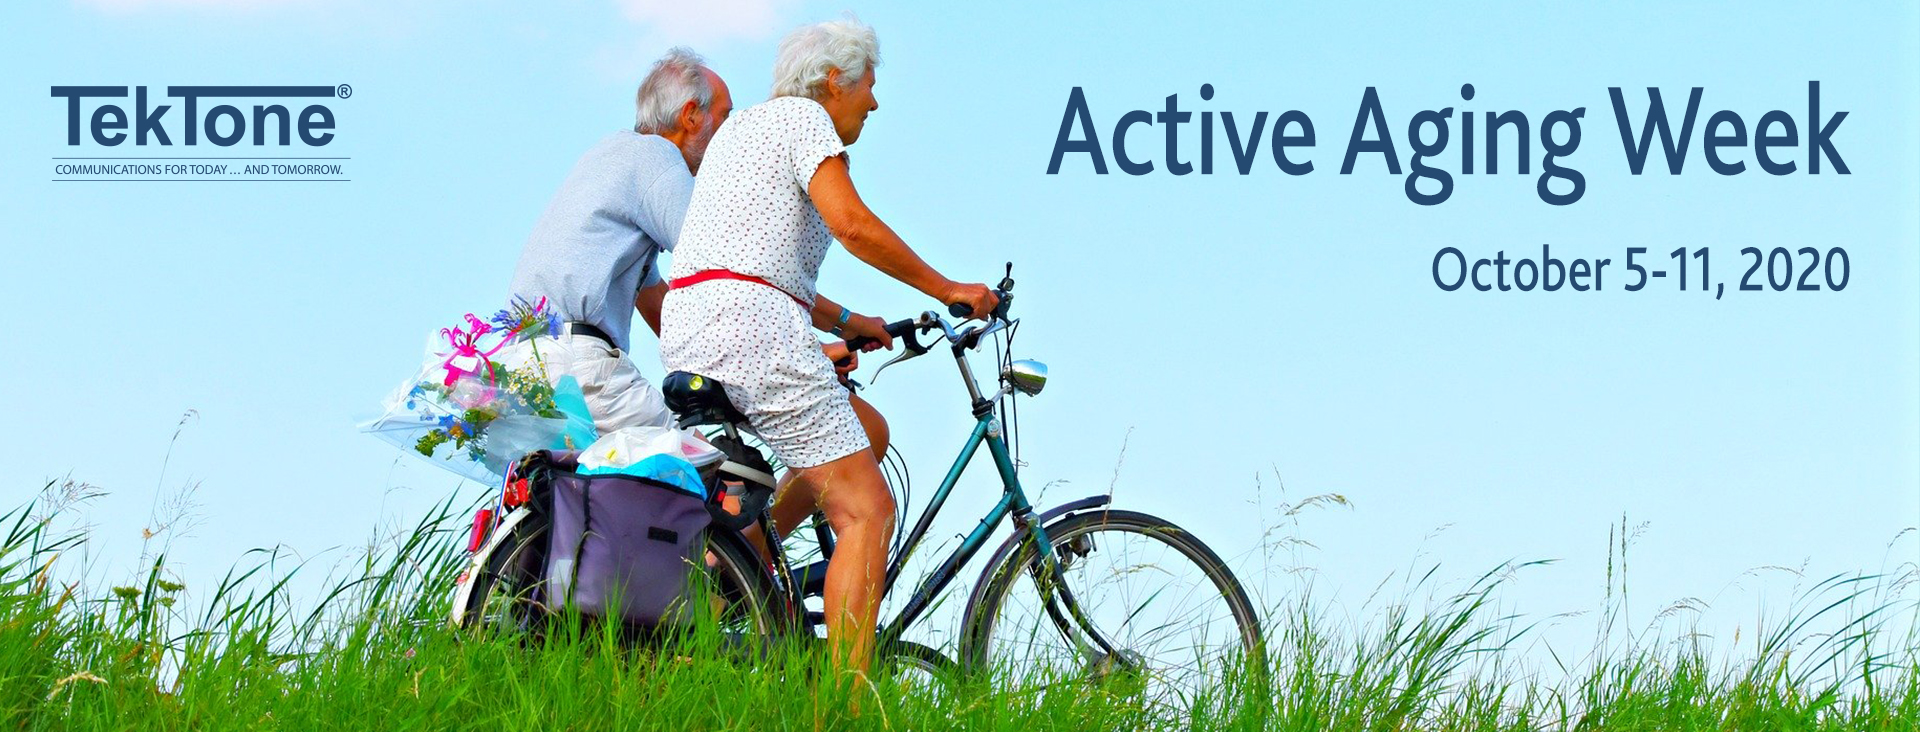 Active Aging Week-2020 - TekTone®